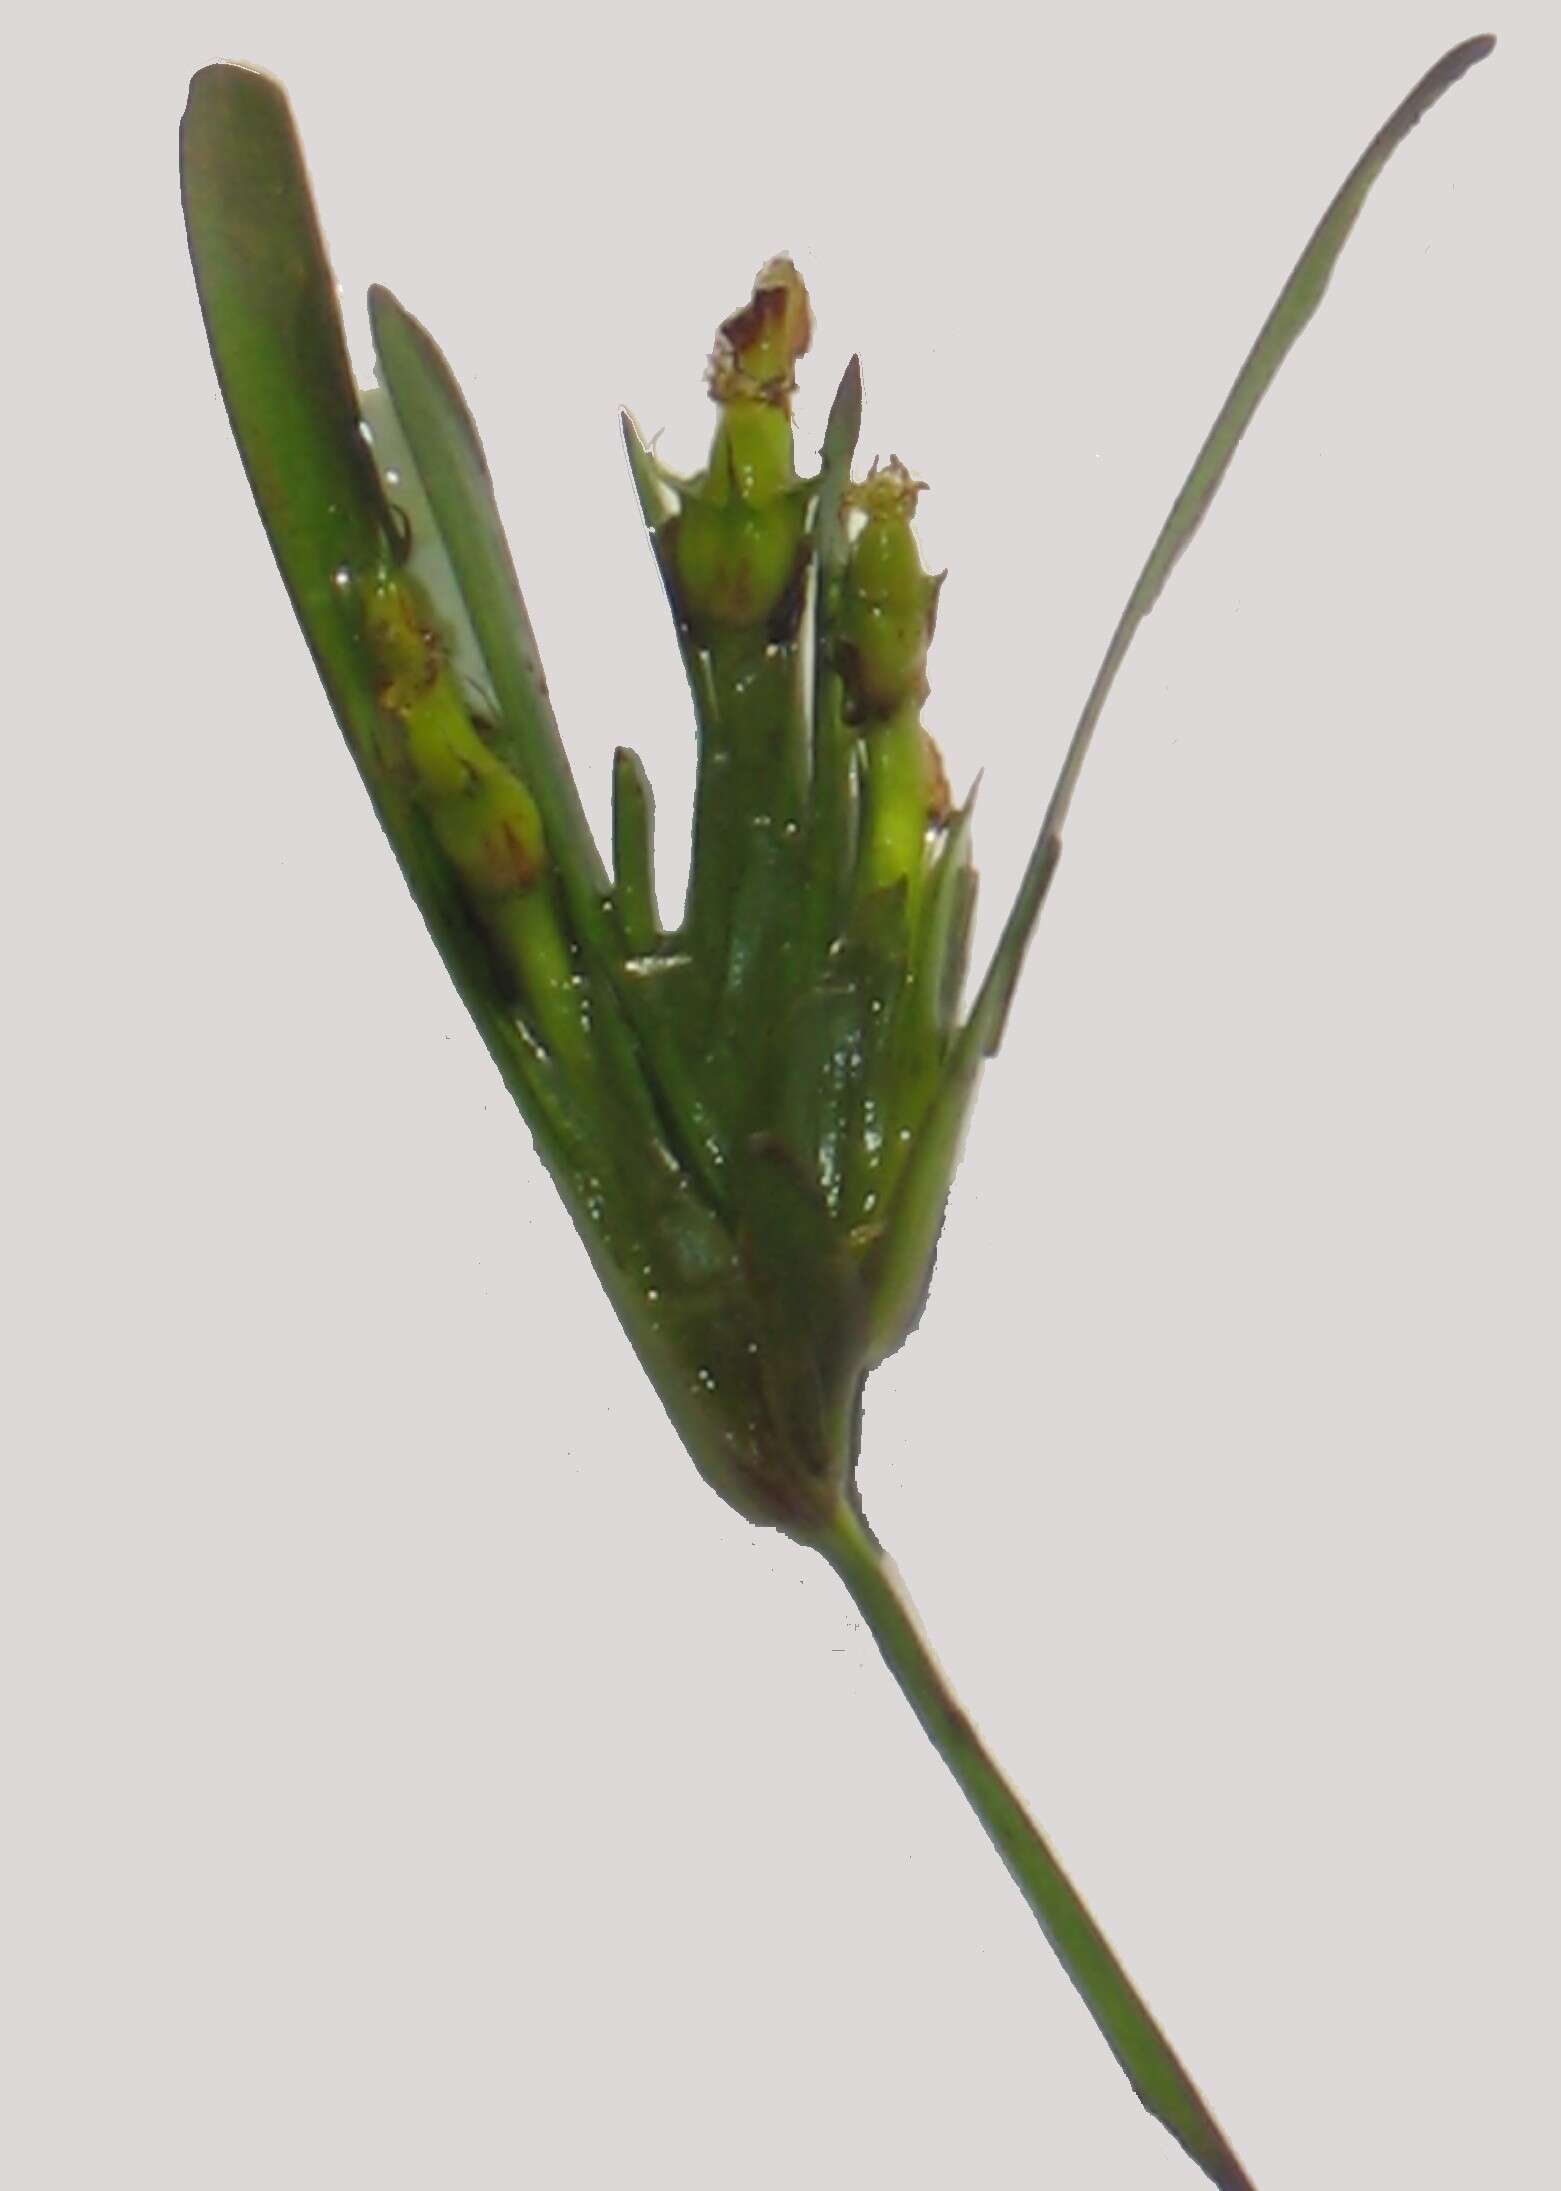 Image of Posidoniaceae